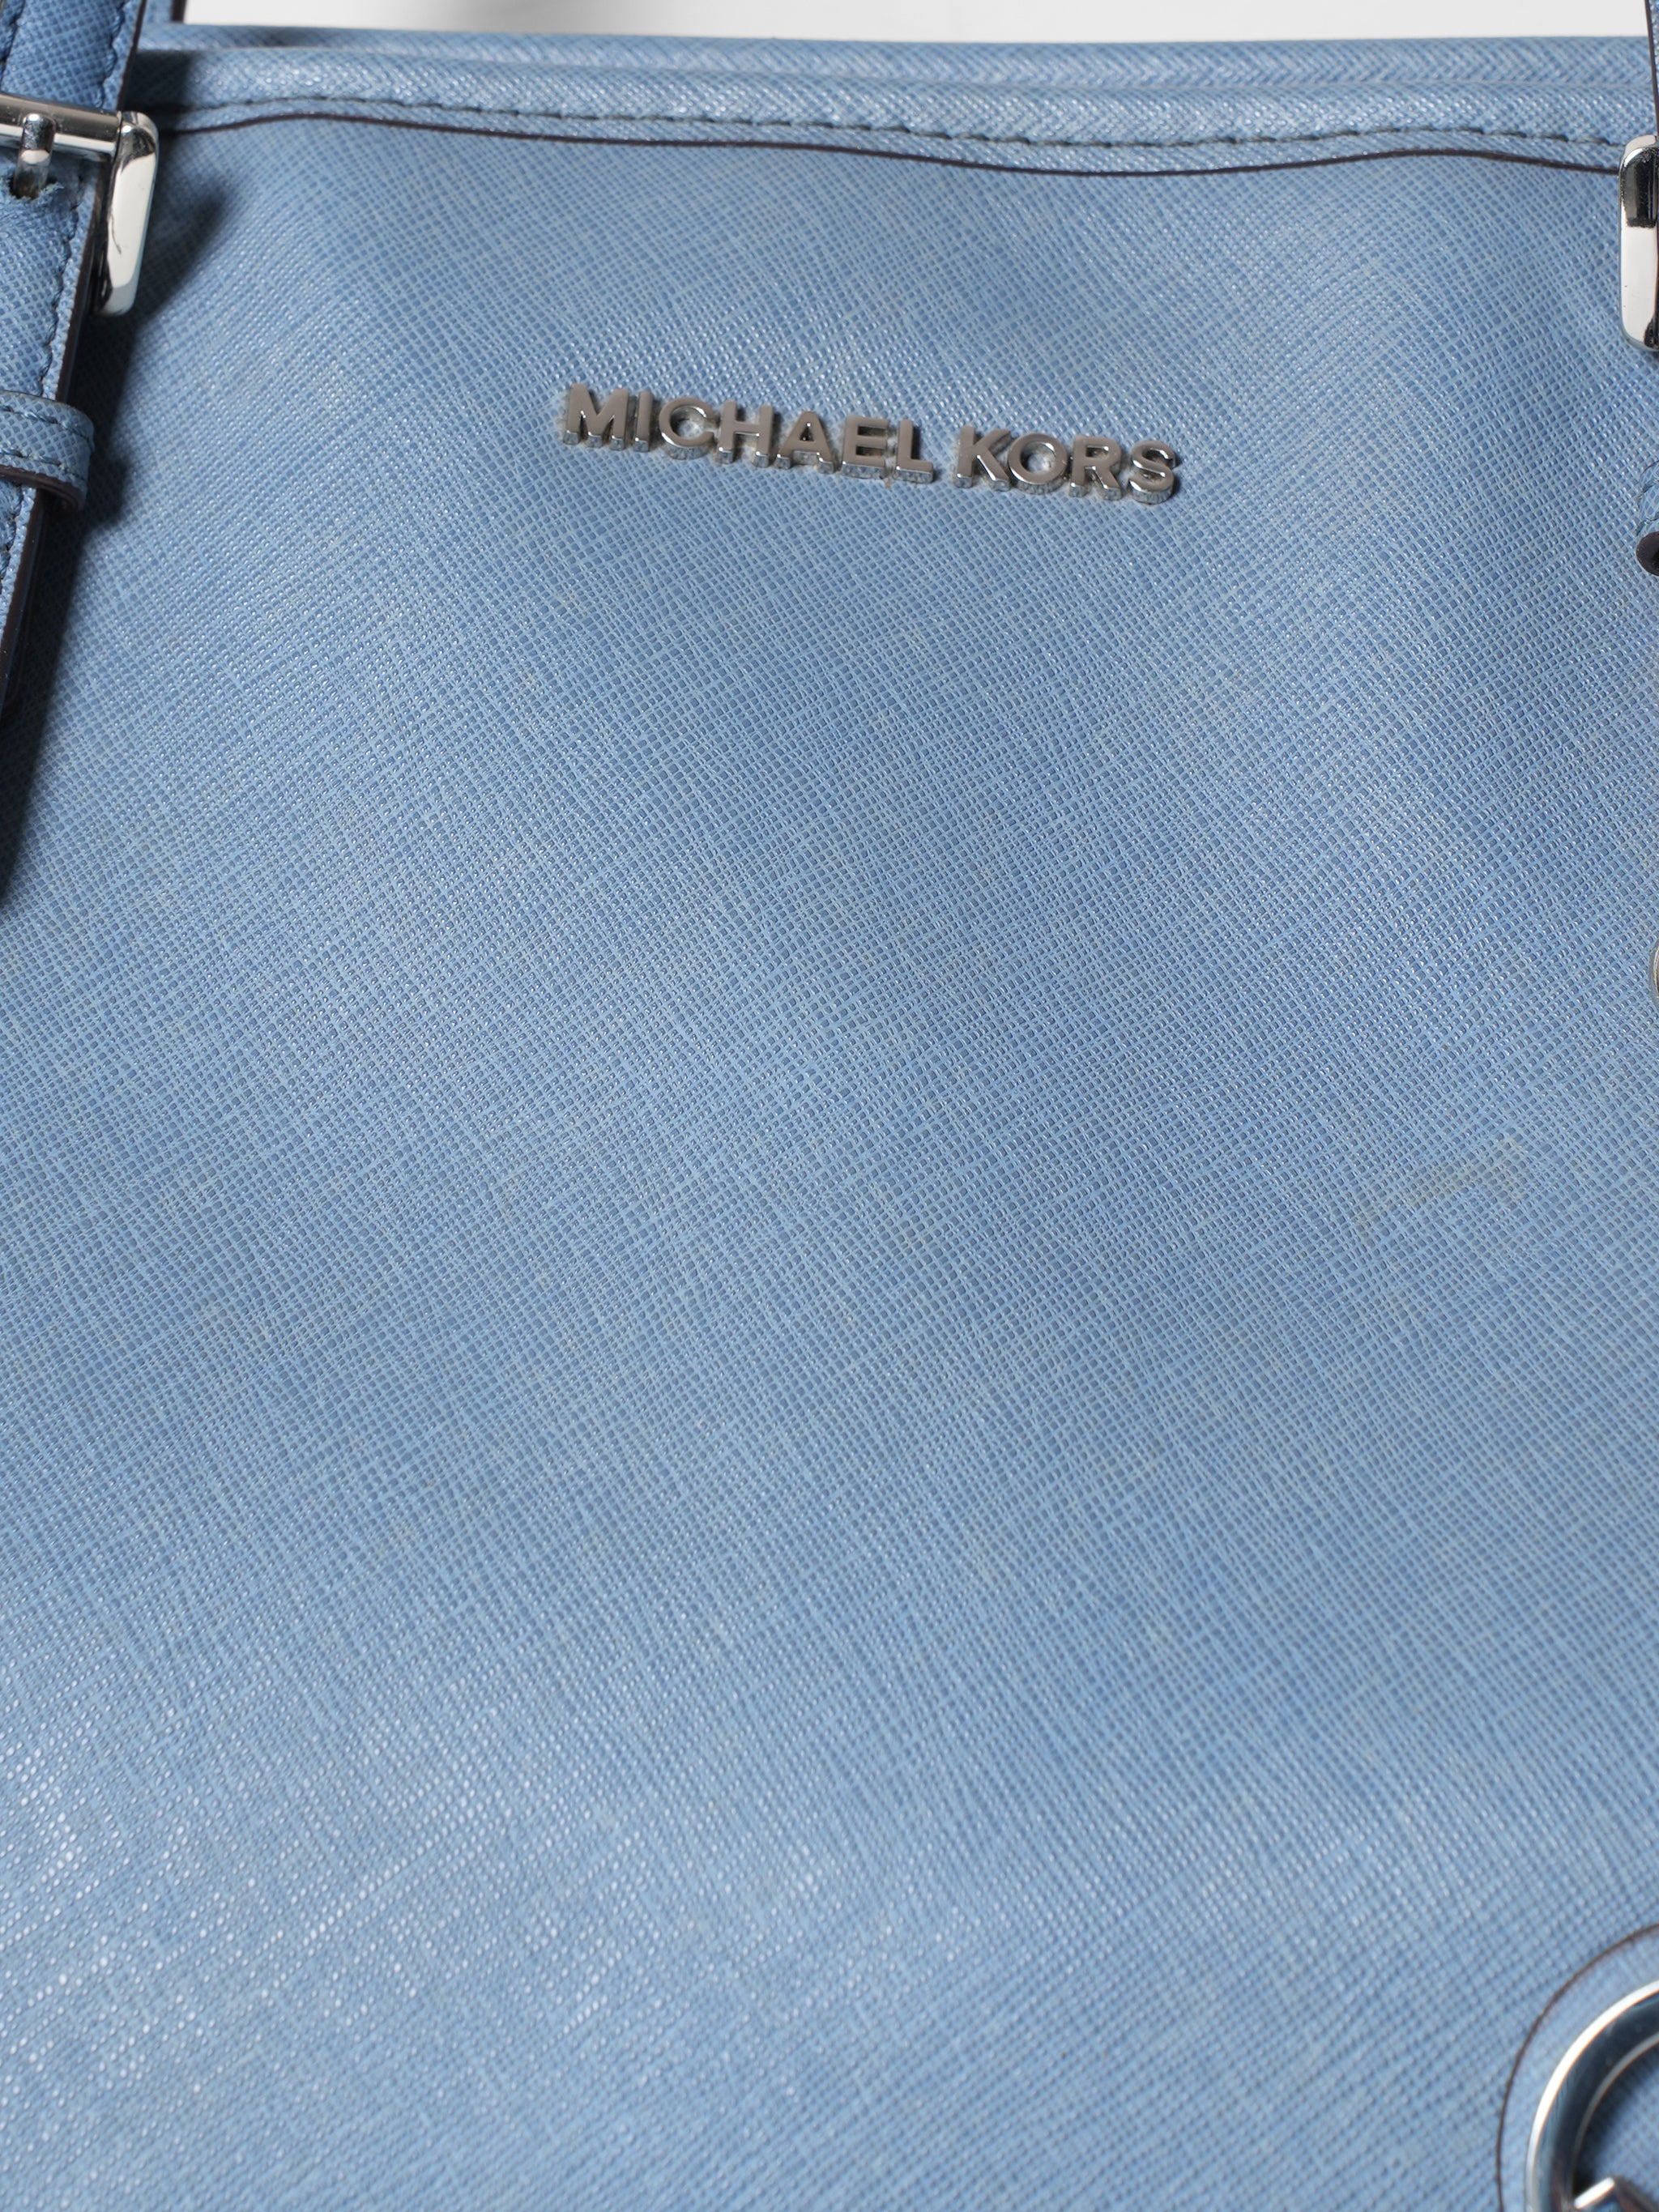 Michael Kors Saffiano Leather Travel Tote